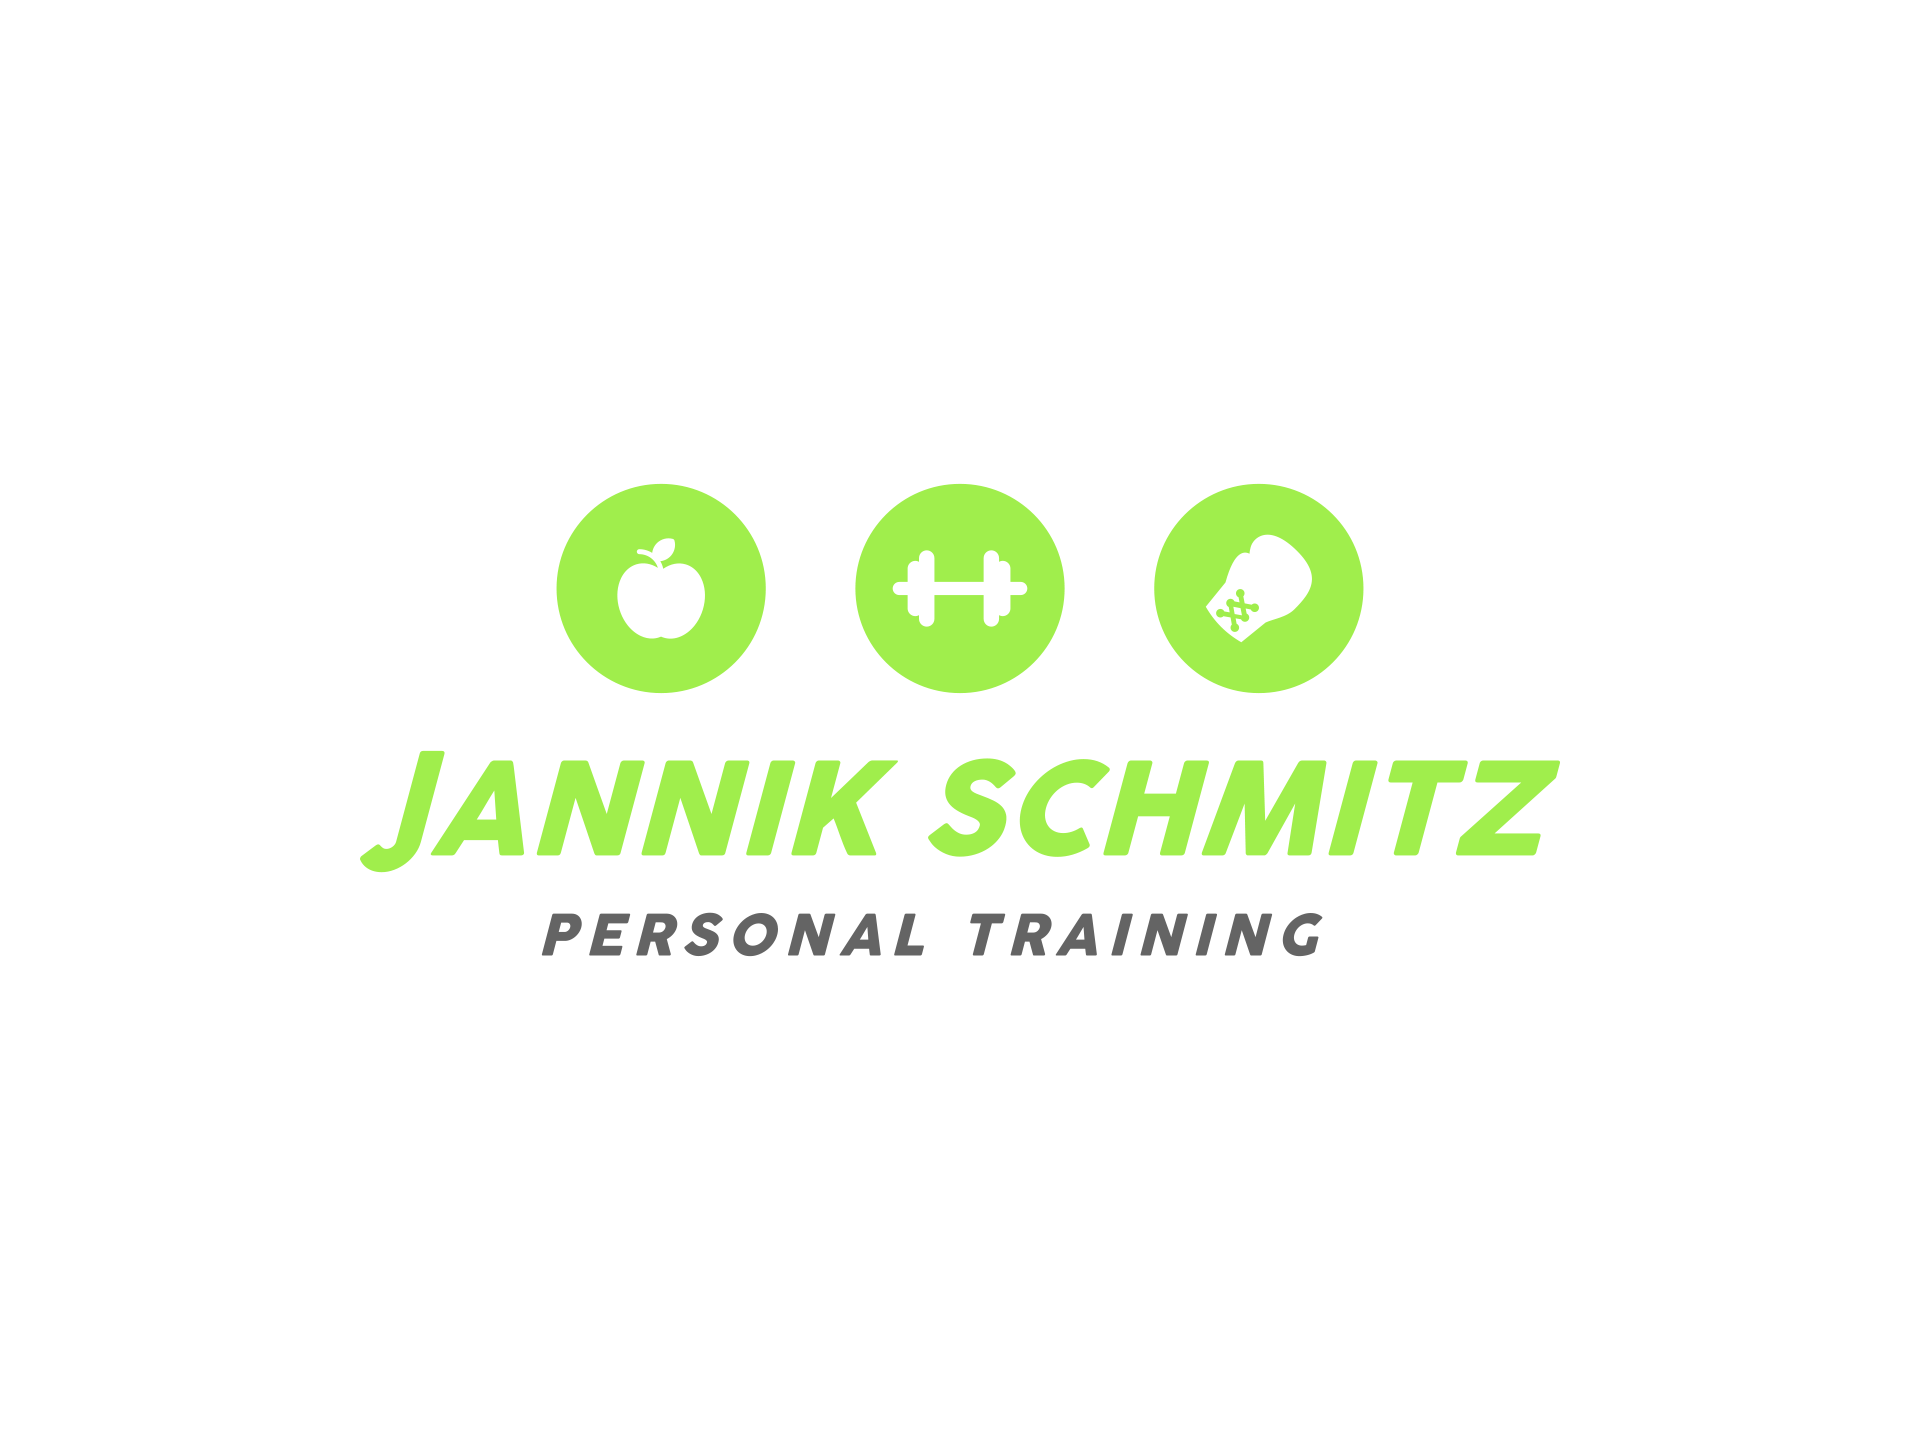 Jannik Schmitz - Personal Training